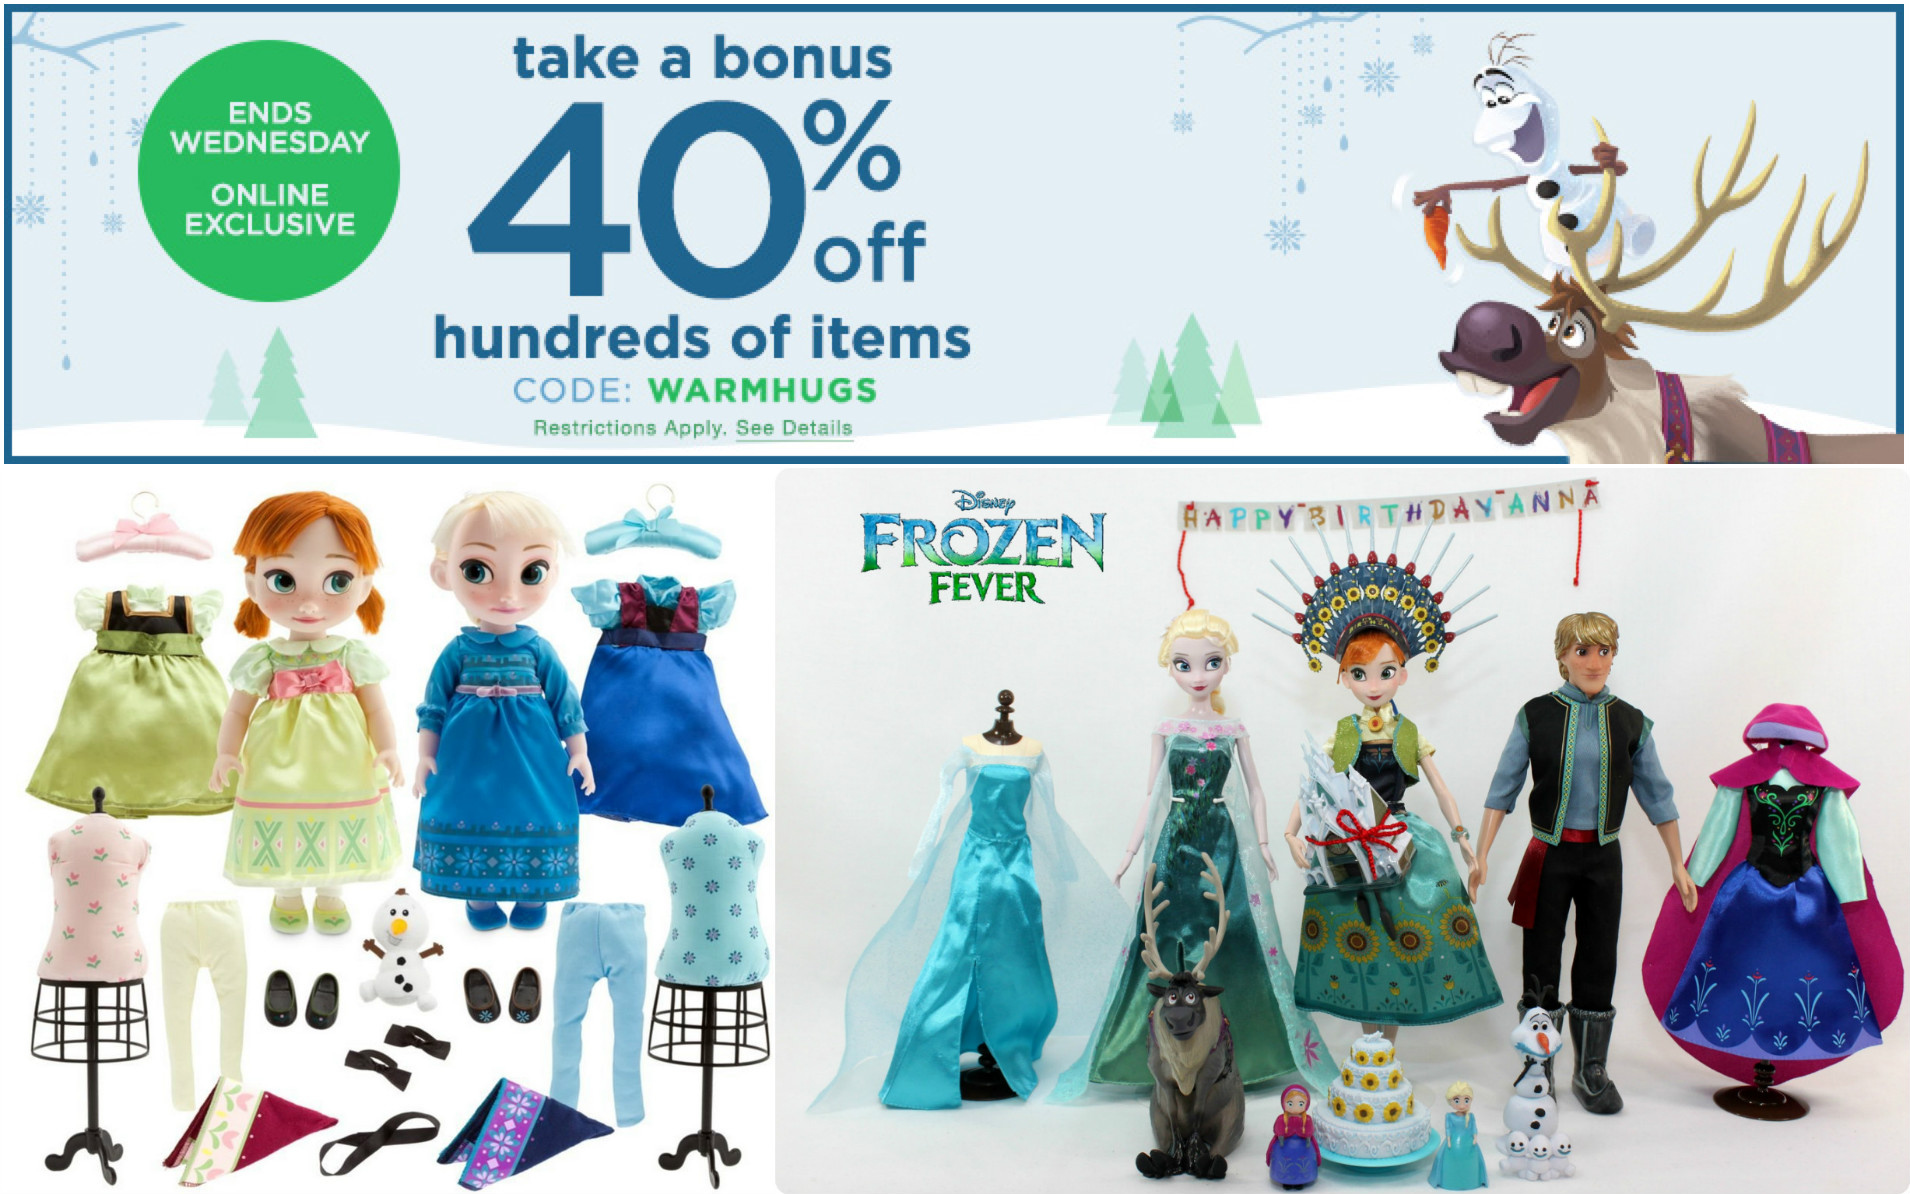 Disney Store Frozen Anna and Elsa Animators Collection Dolls Deluxe 2015 Set  - Walmart.com